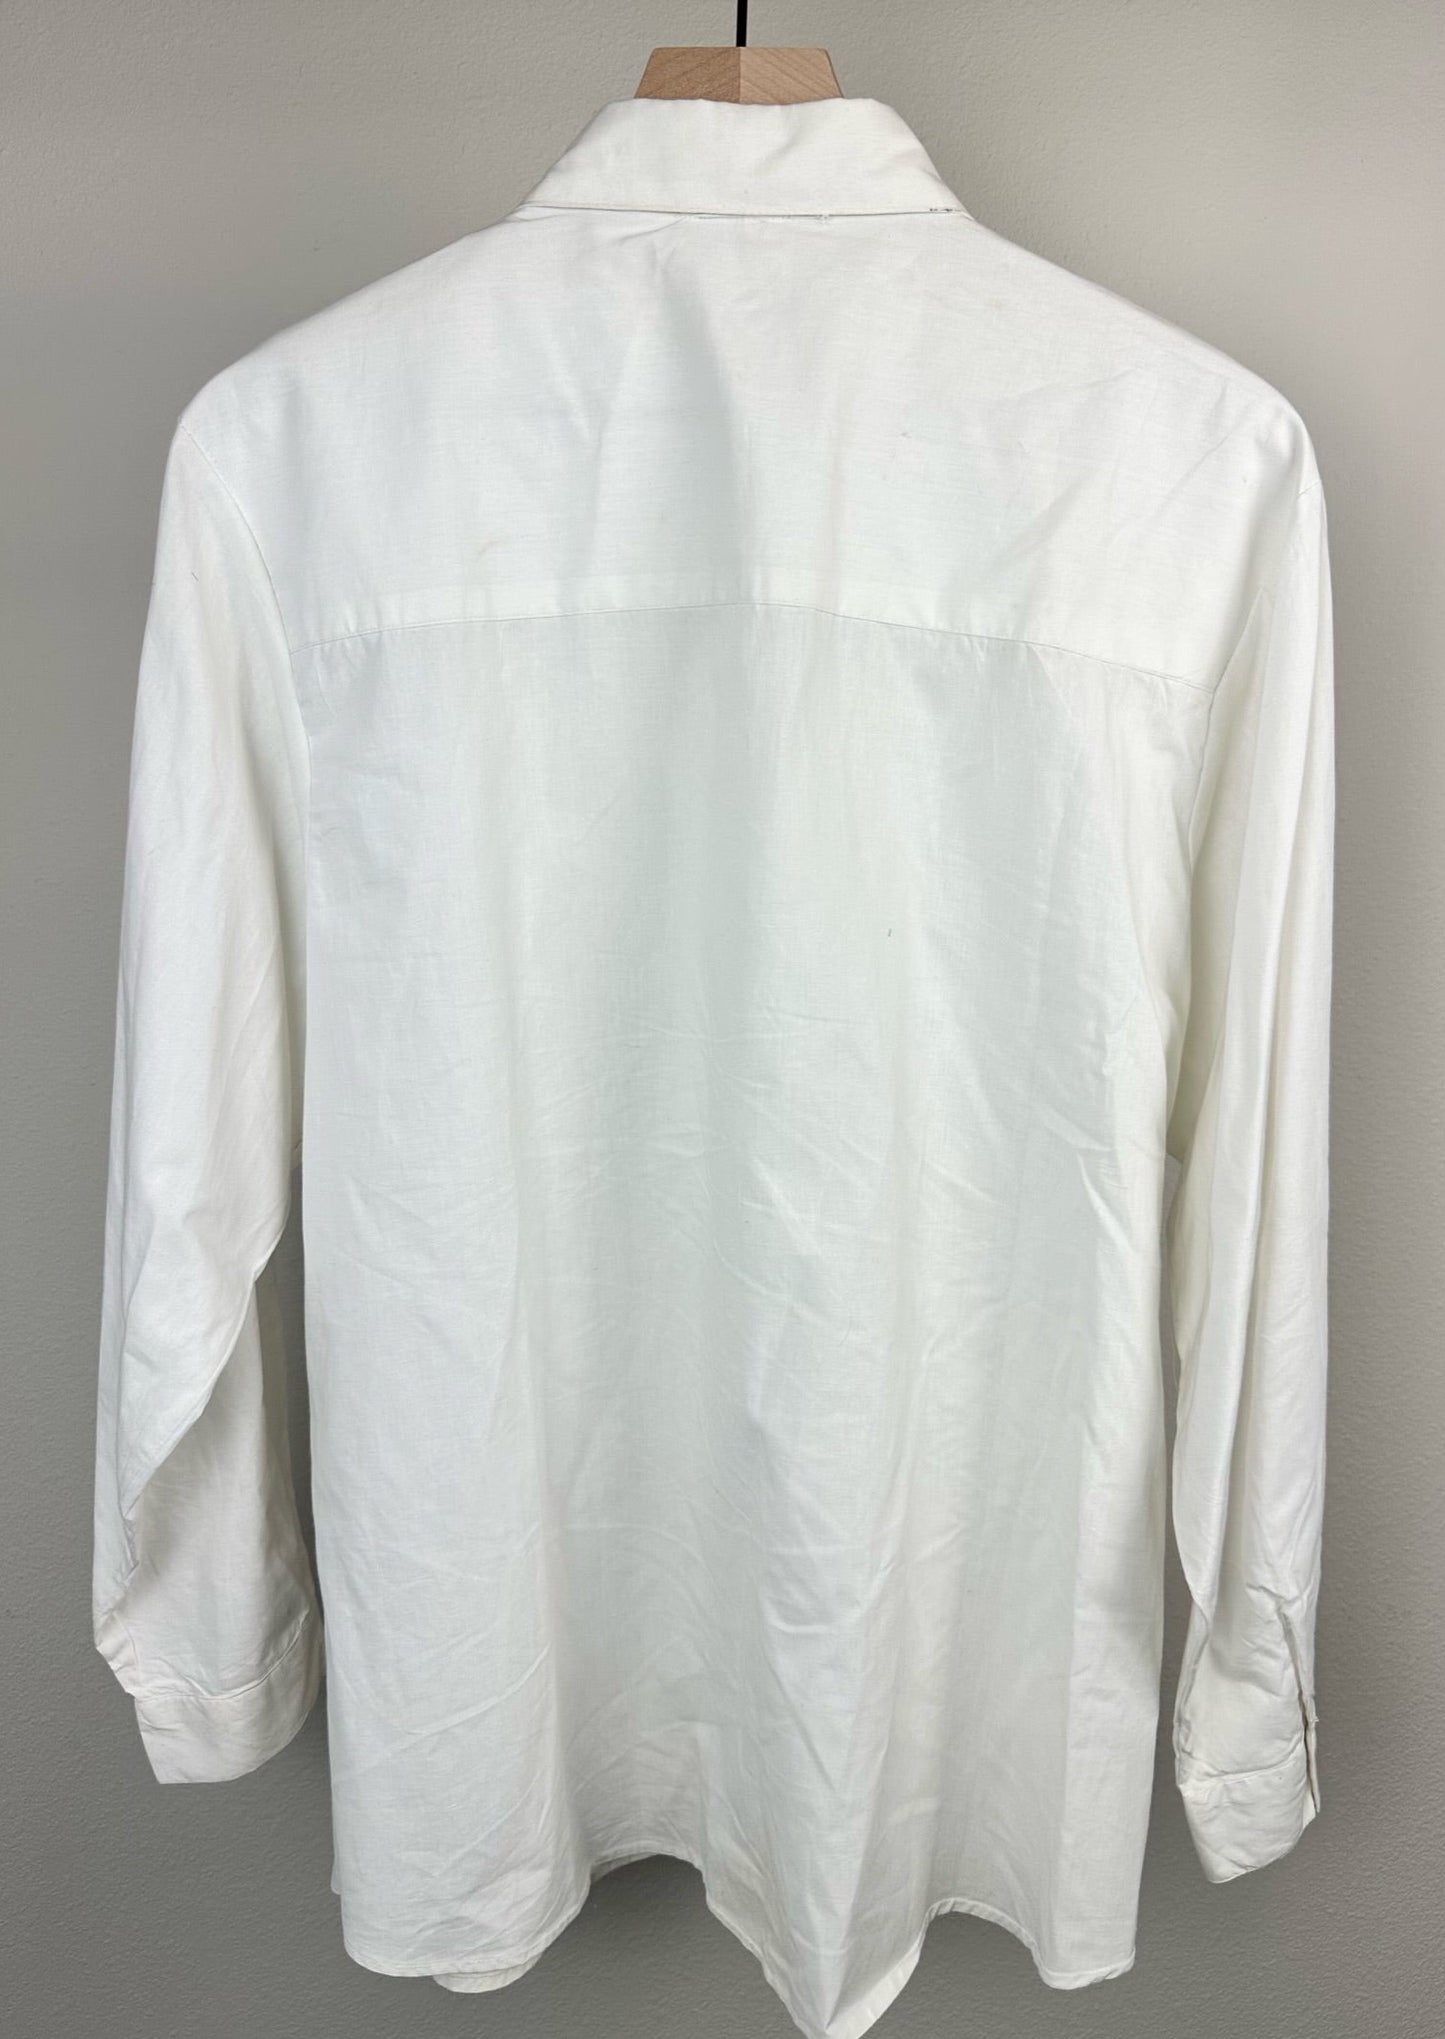 America Sportswear White Beaded Shirt